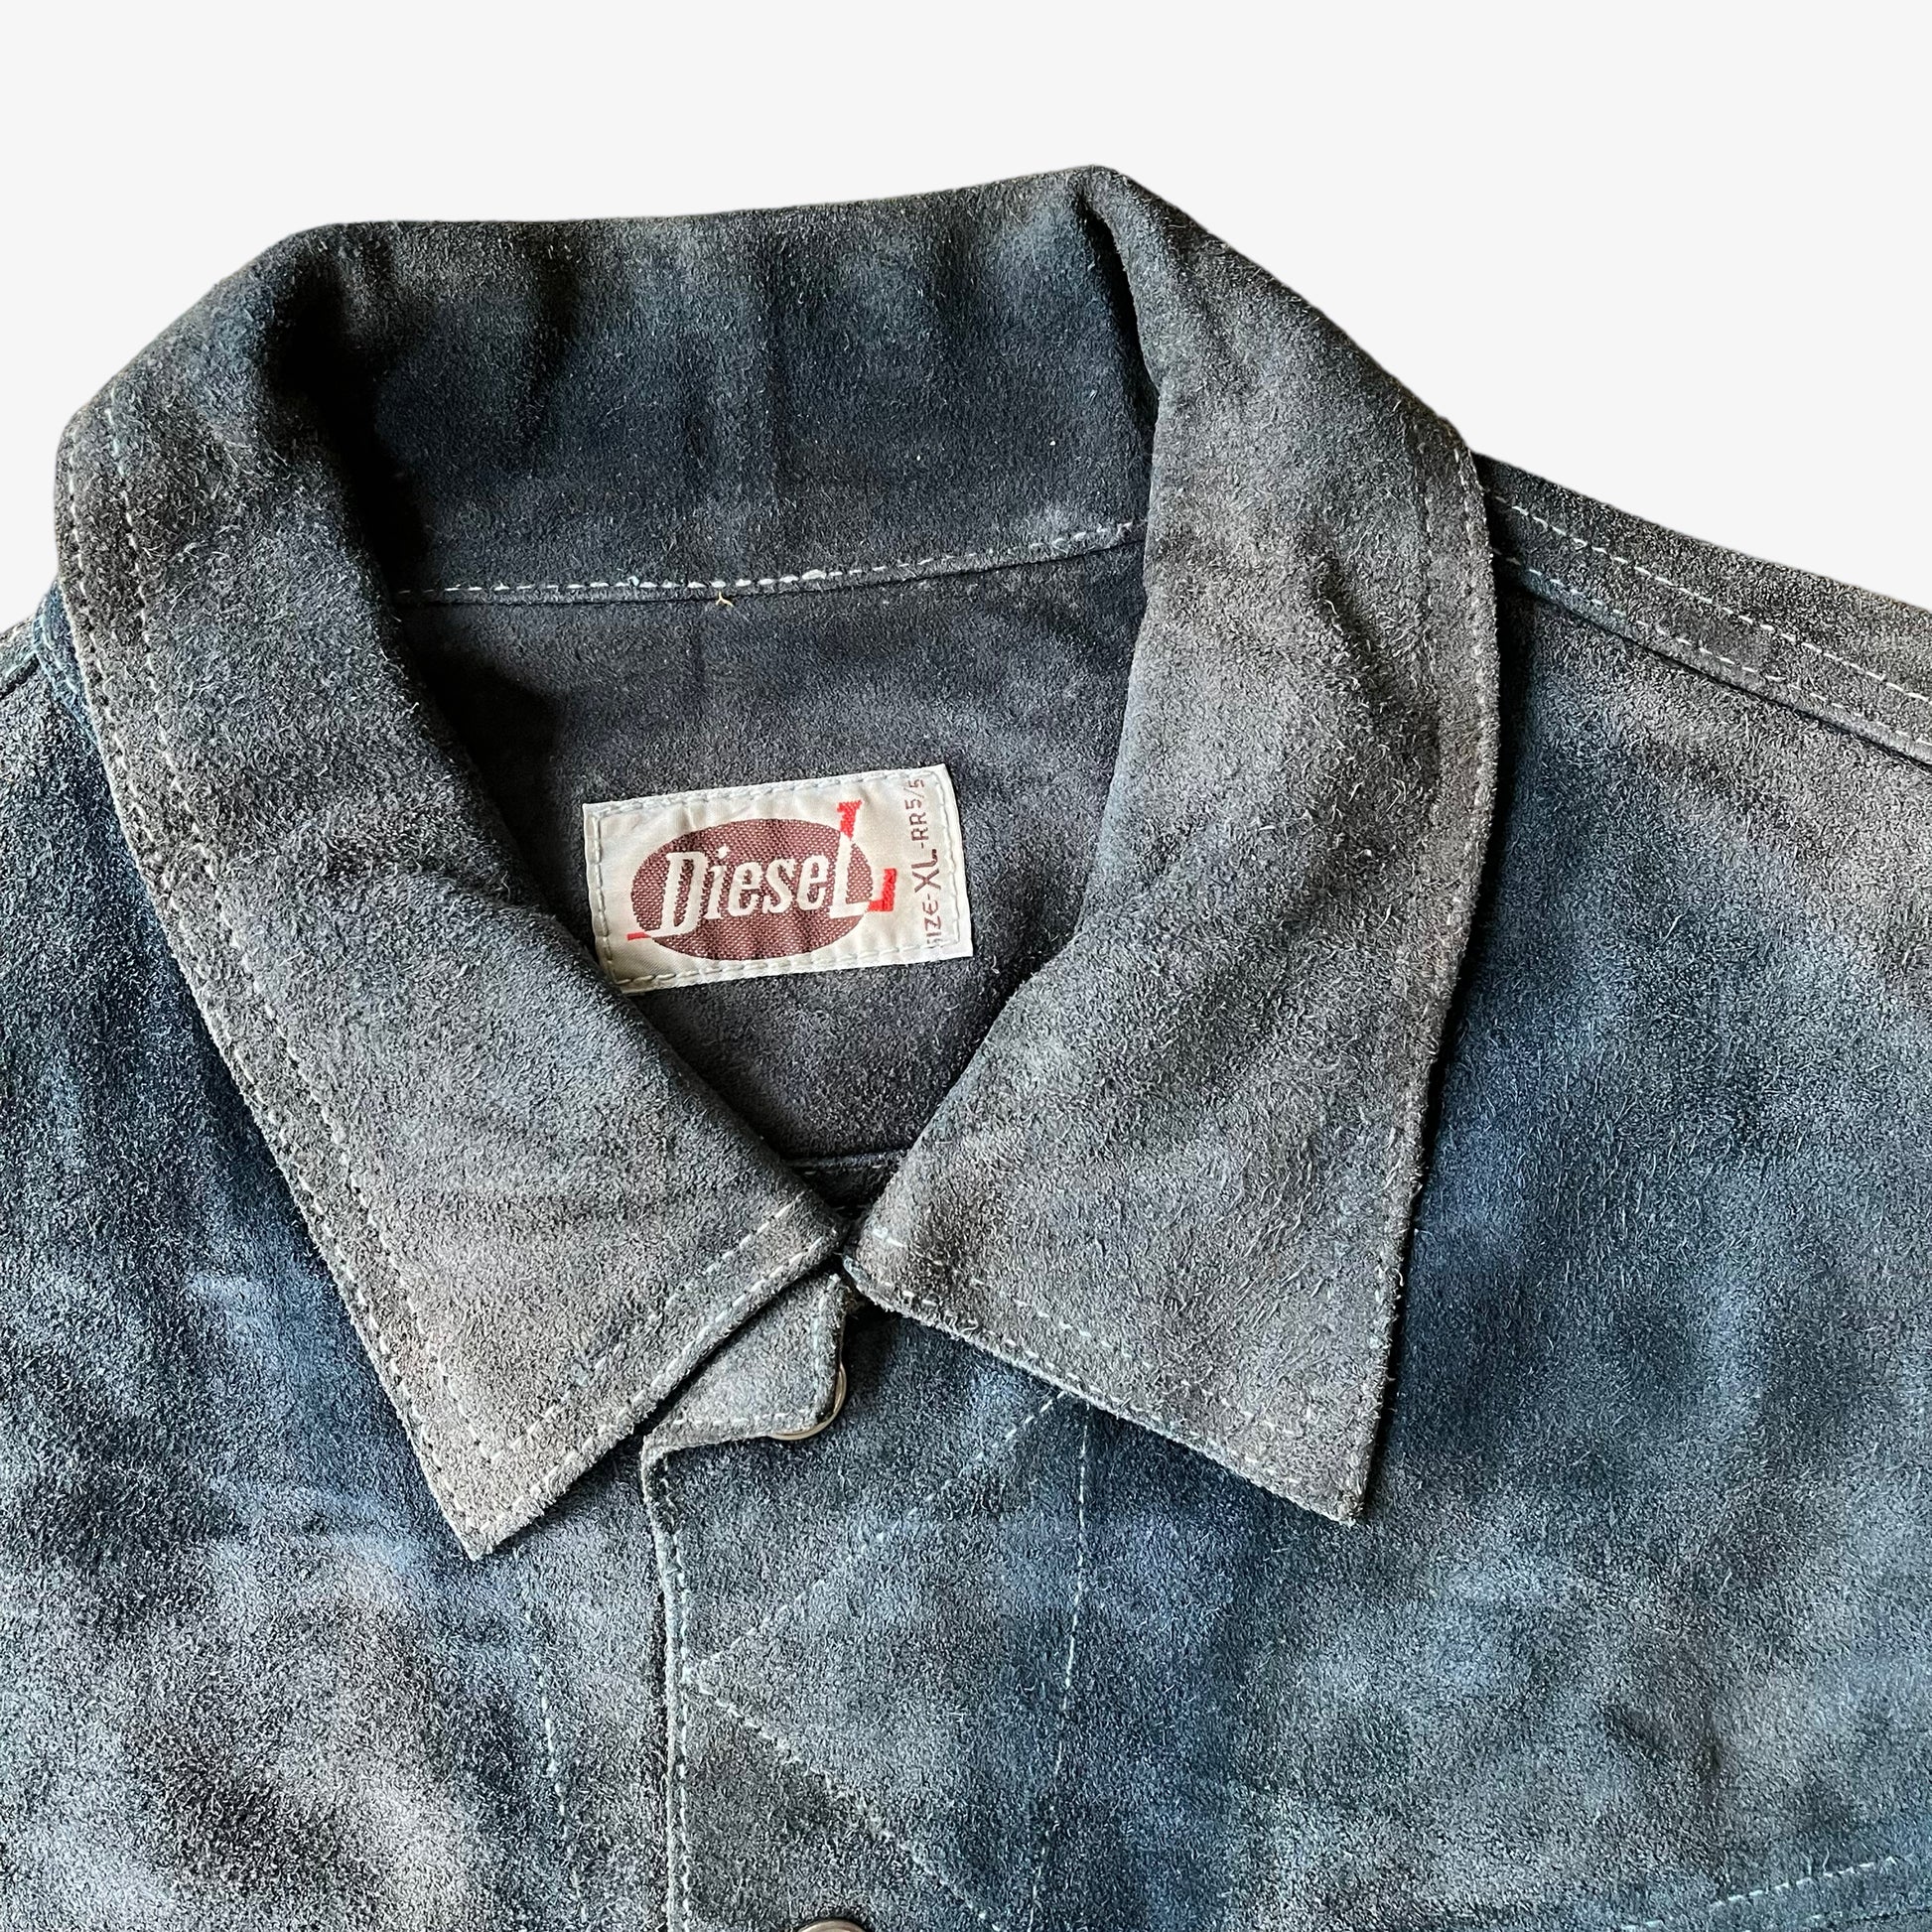 Vintage 1980s Diesel Blue Navy Leather Suede Jacket Label - Casspios Dream